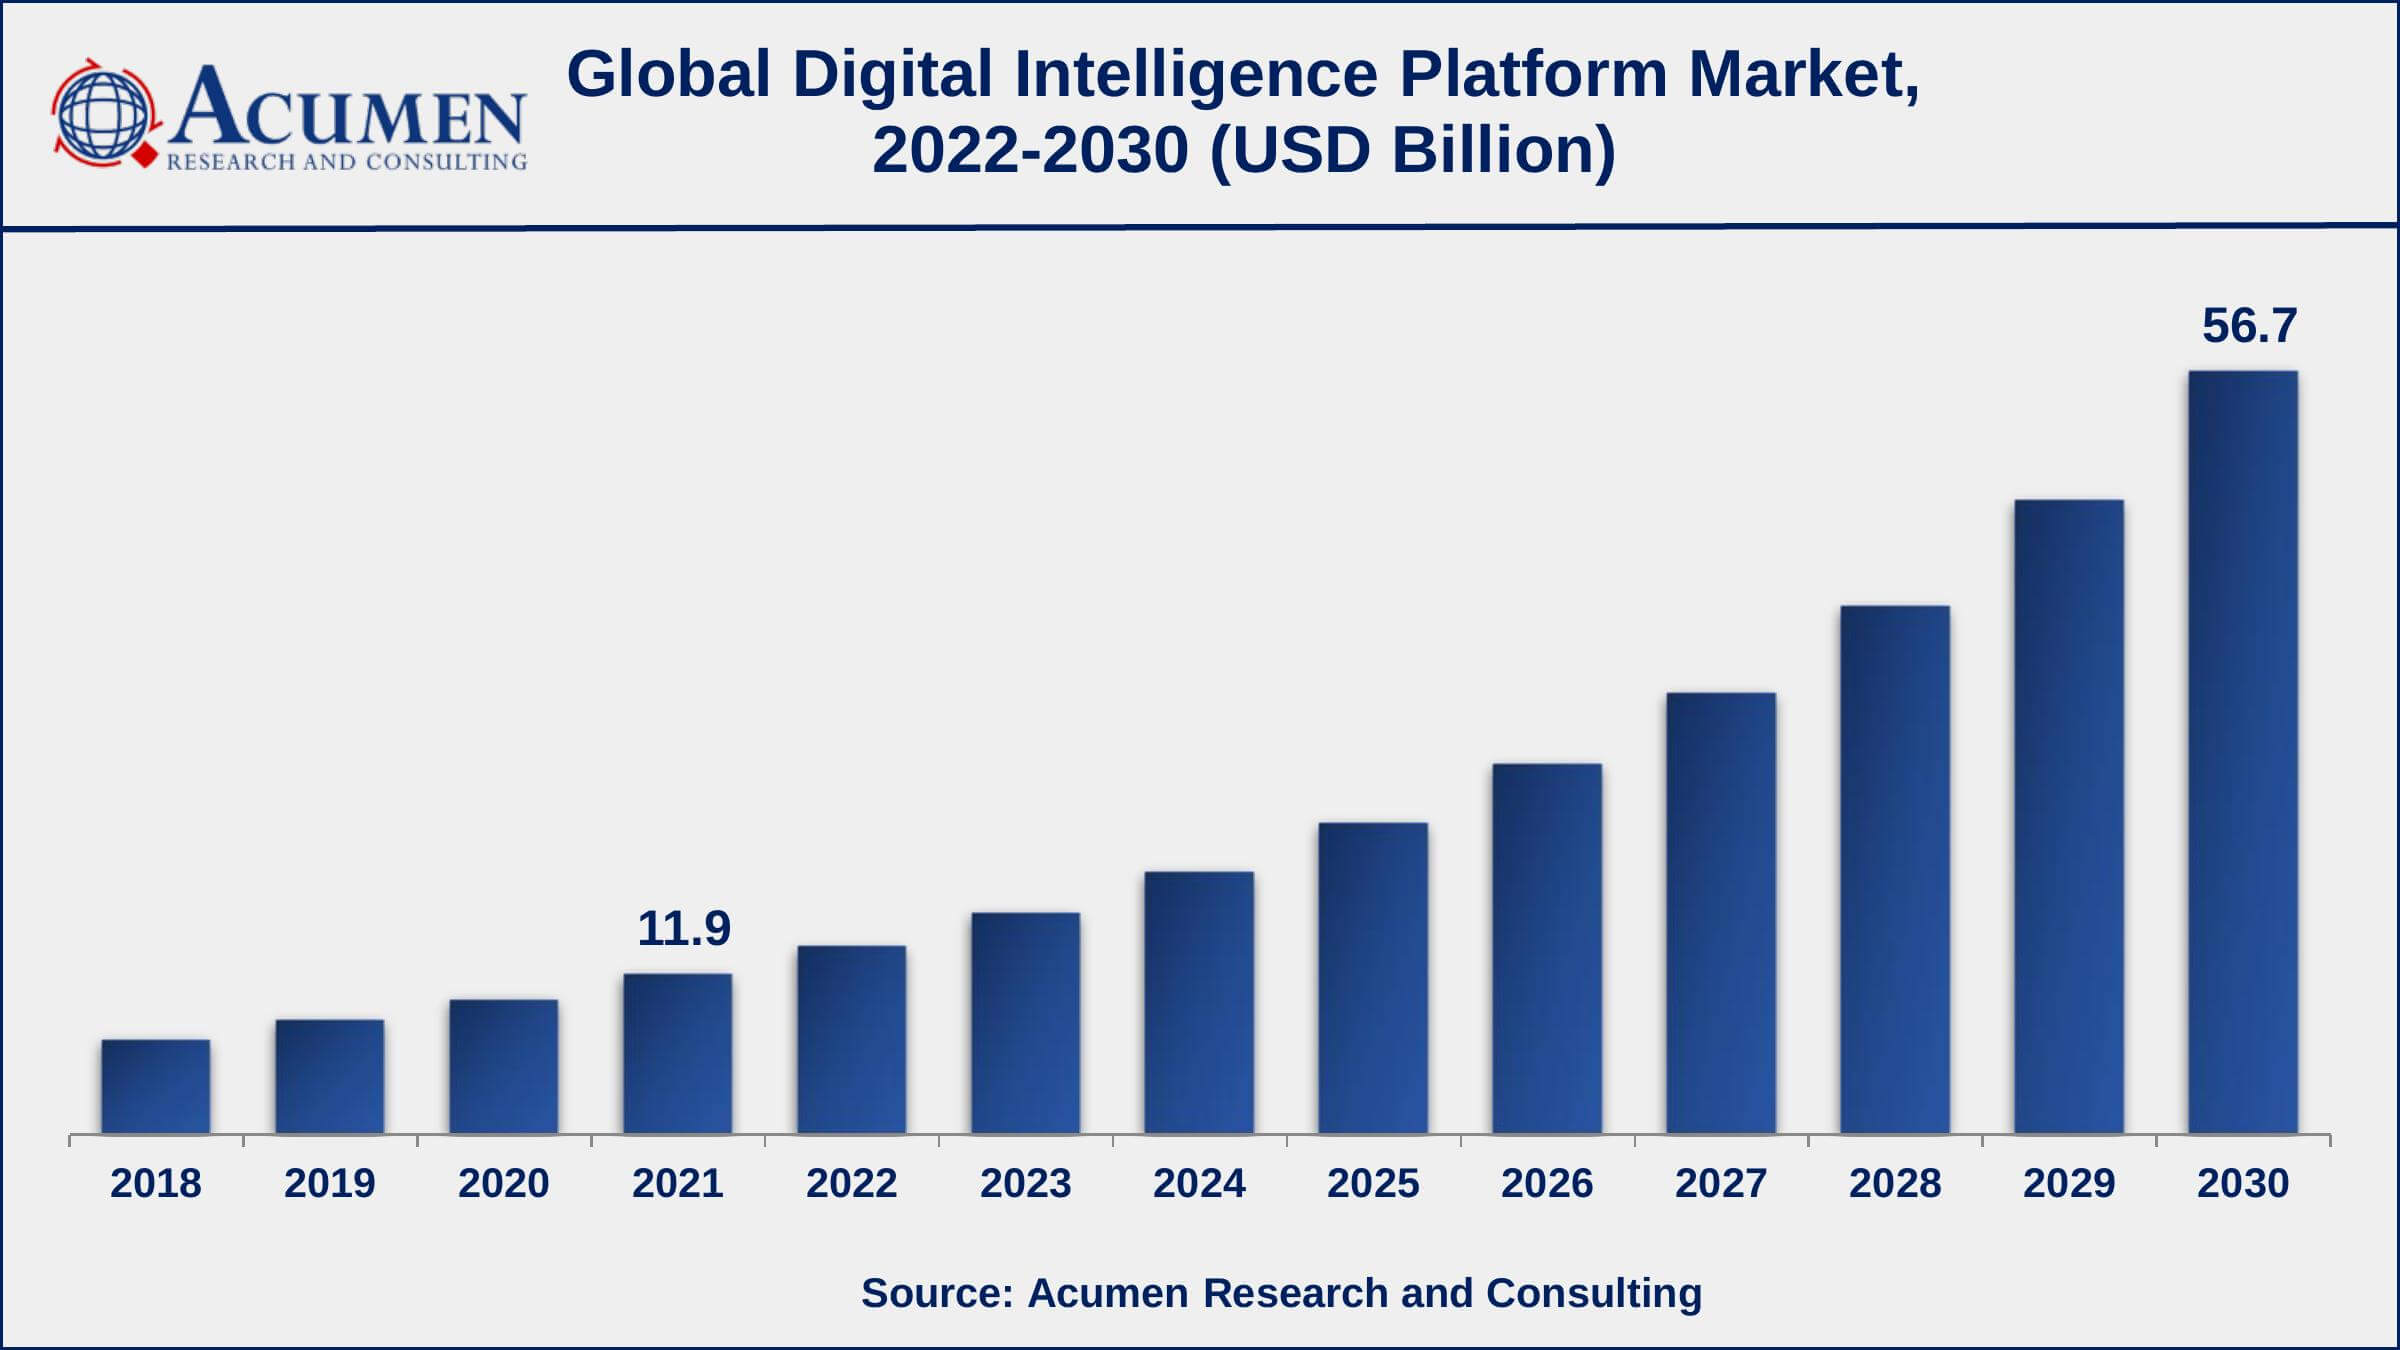 Global Digital Intelligence Platform Market Dynamics